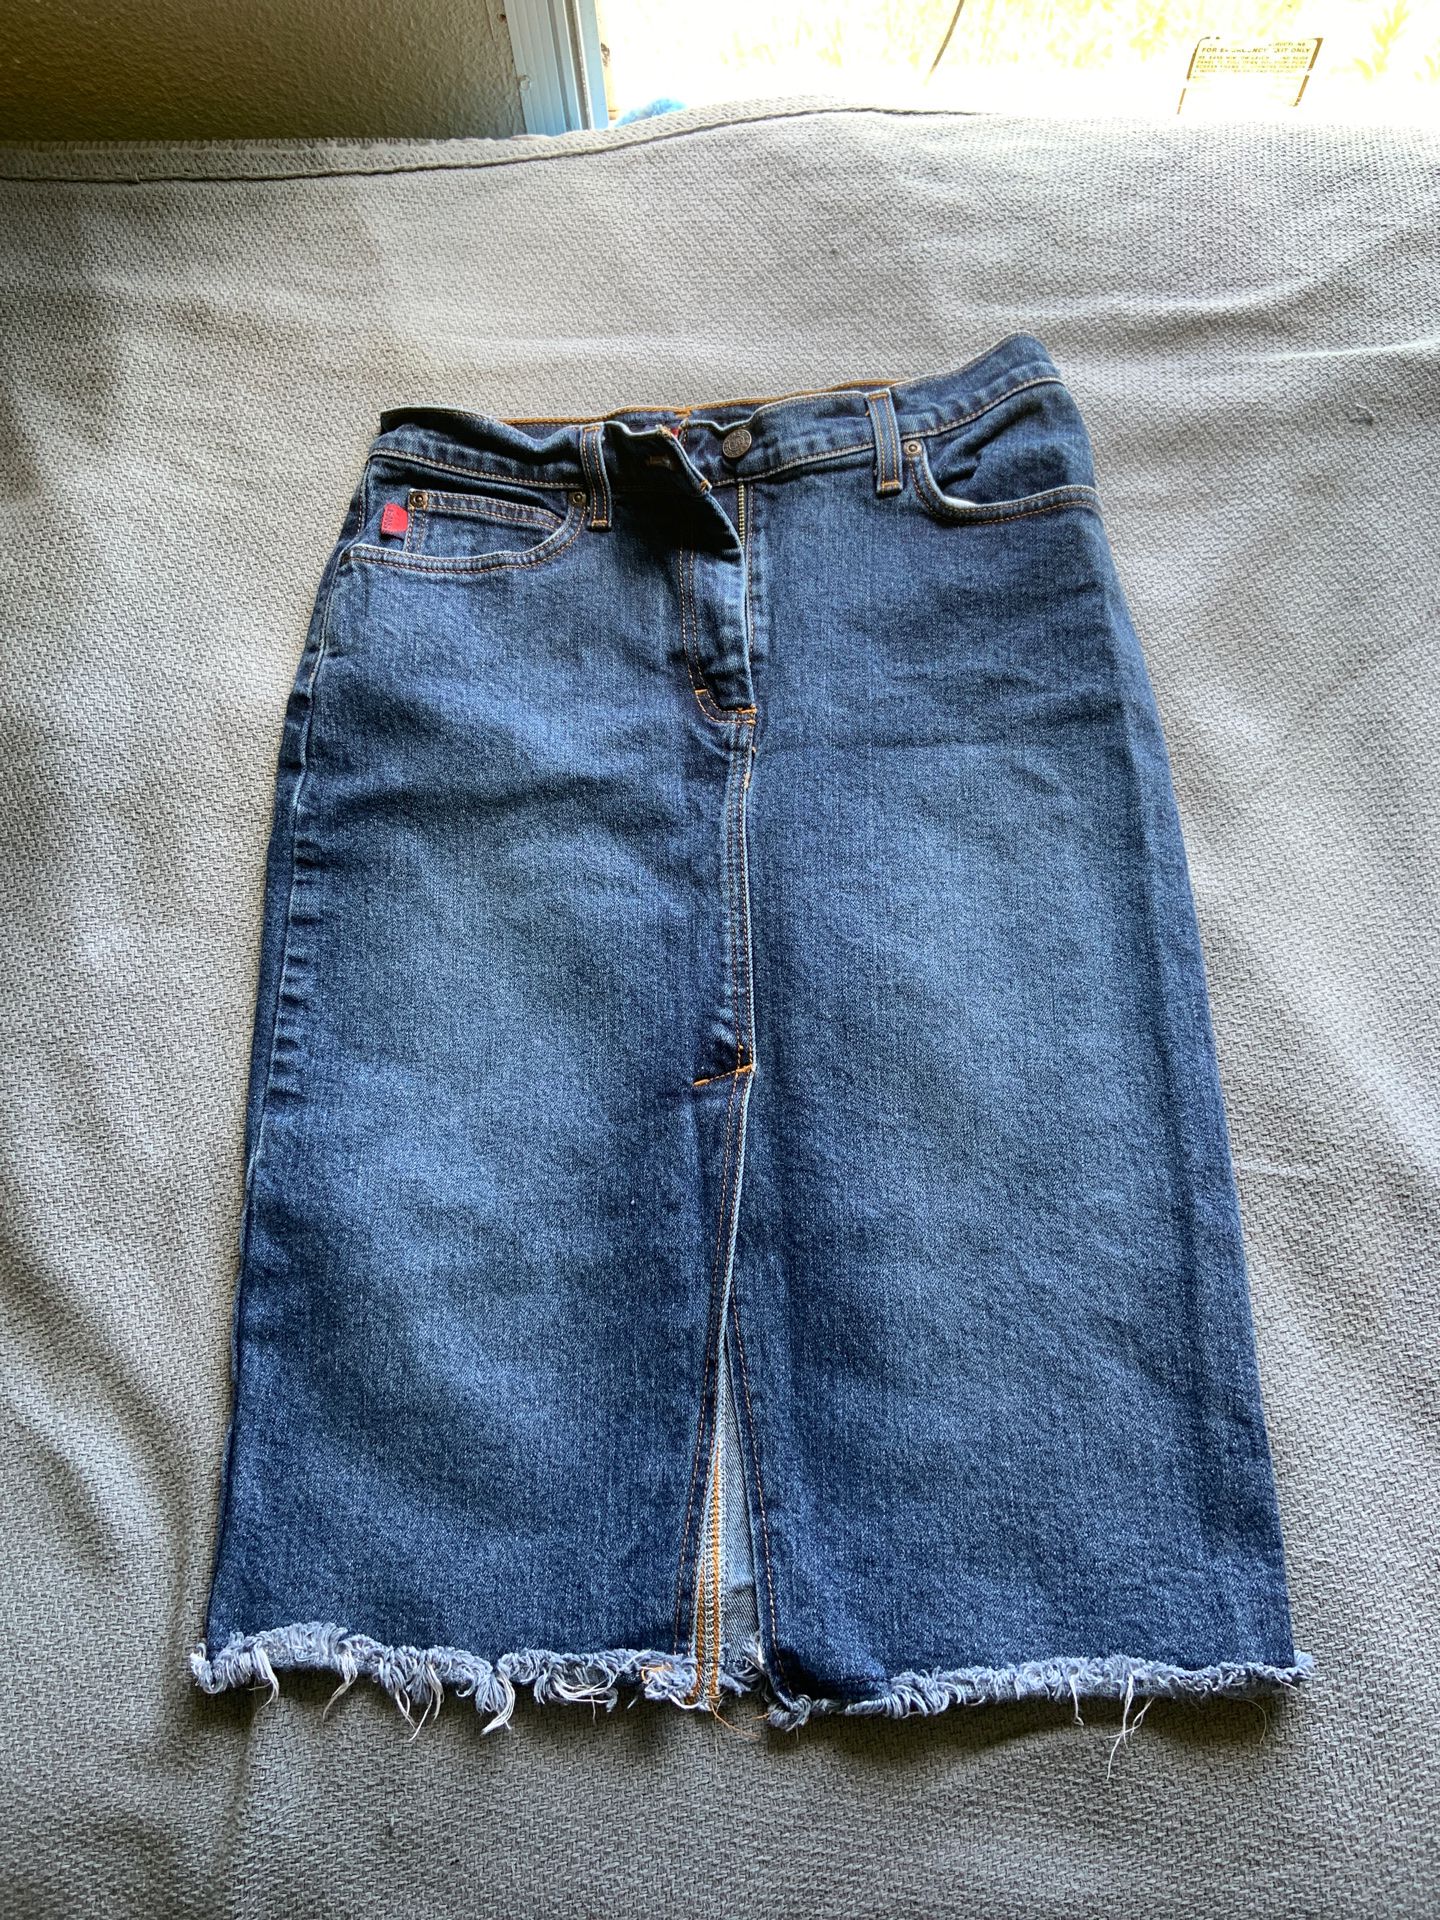 Jean skirt size 7/8 reg